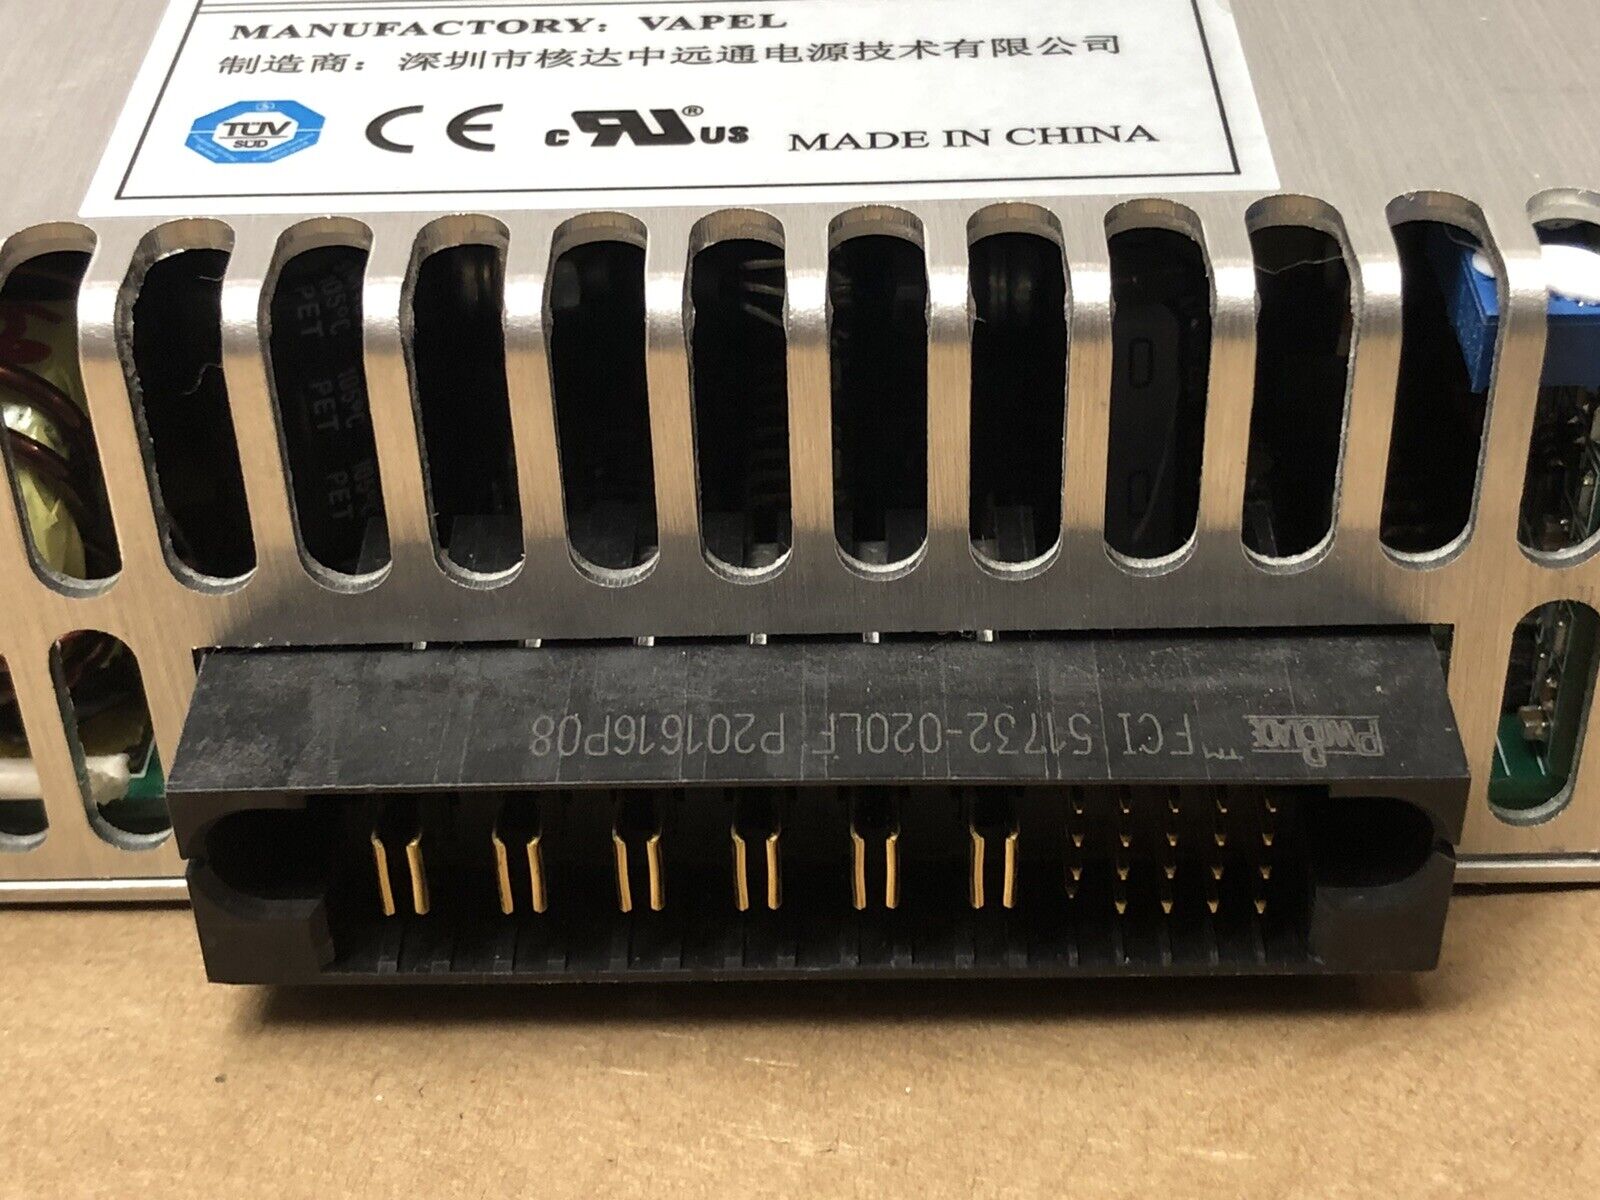 HP JC110B Vapel H3C A9500 Switch A8800 Router Series 1800W AC Power Supply PSU S9500E 1.8kW 48V DC C20.